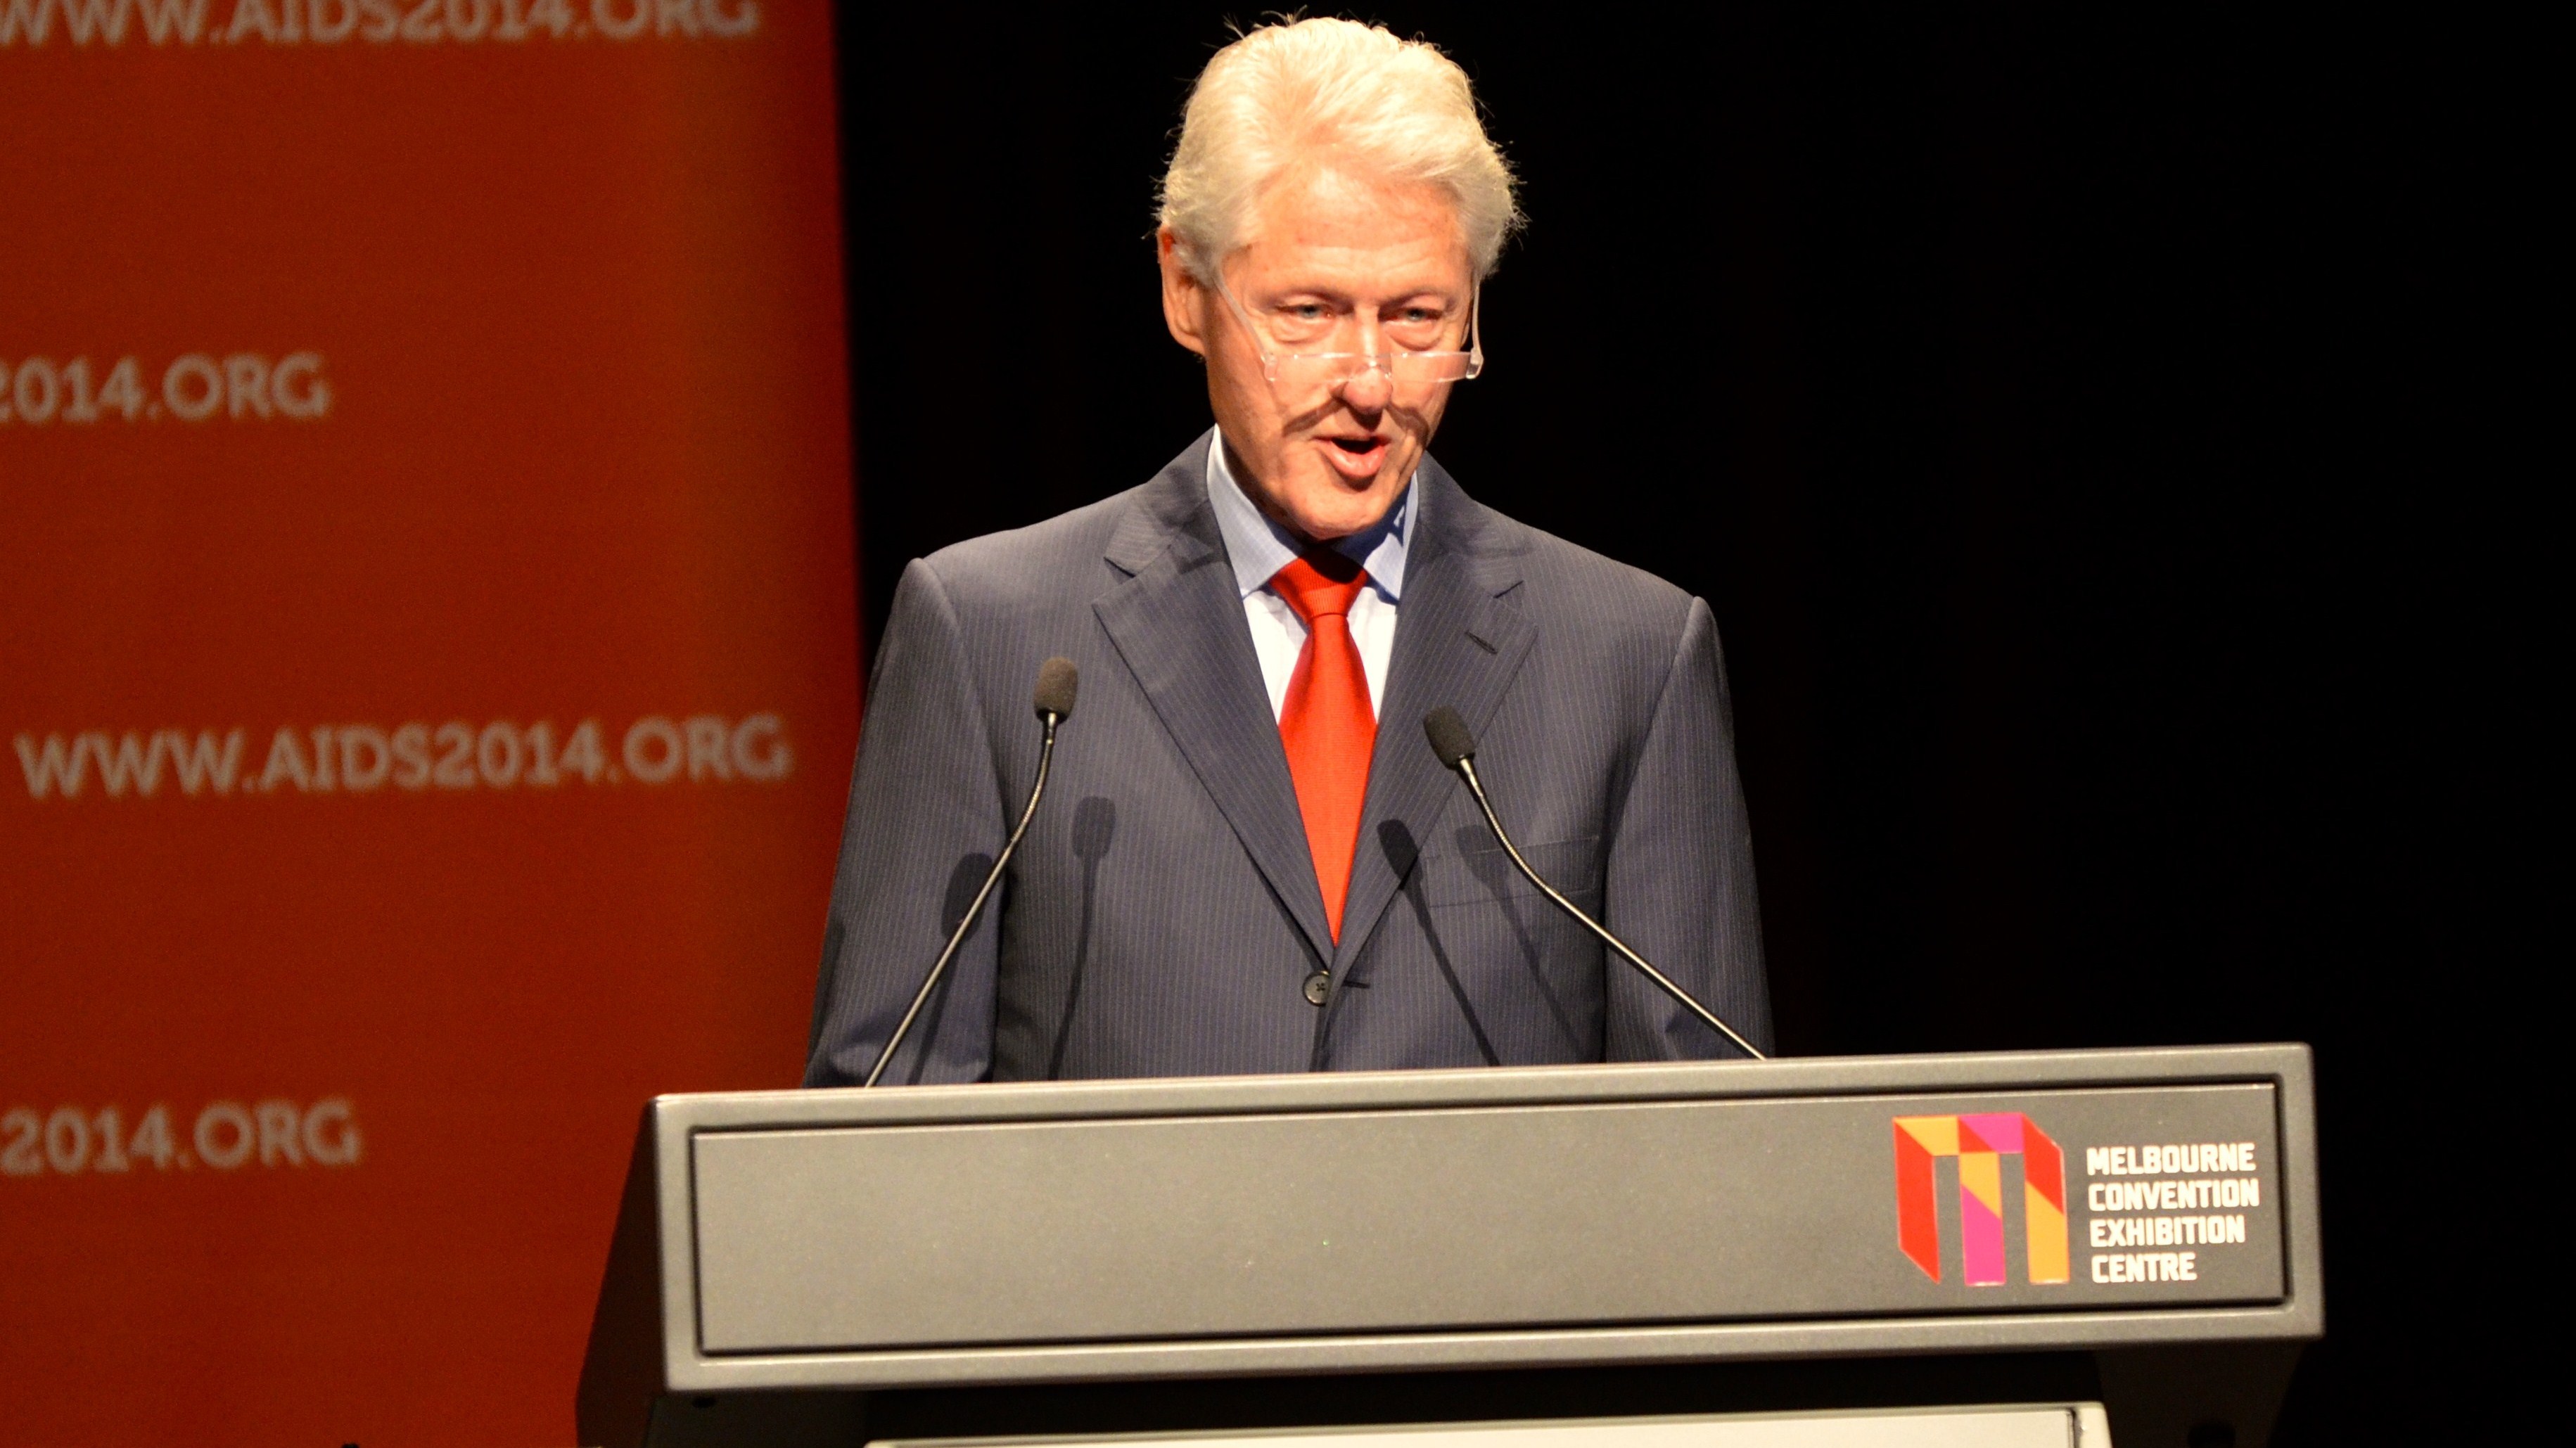 Bill Clinton: AIDS-free generation “over the horizon”